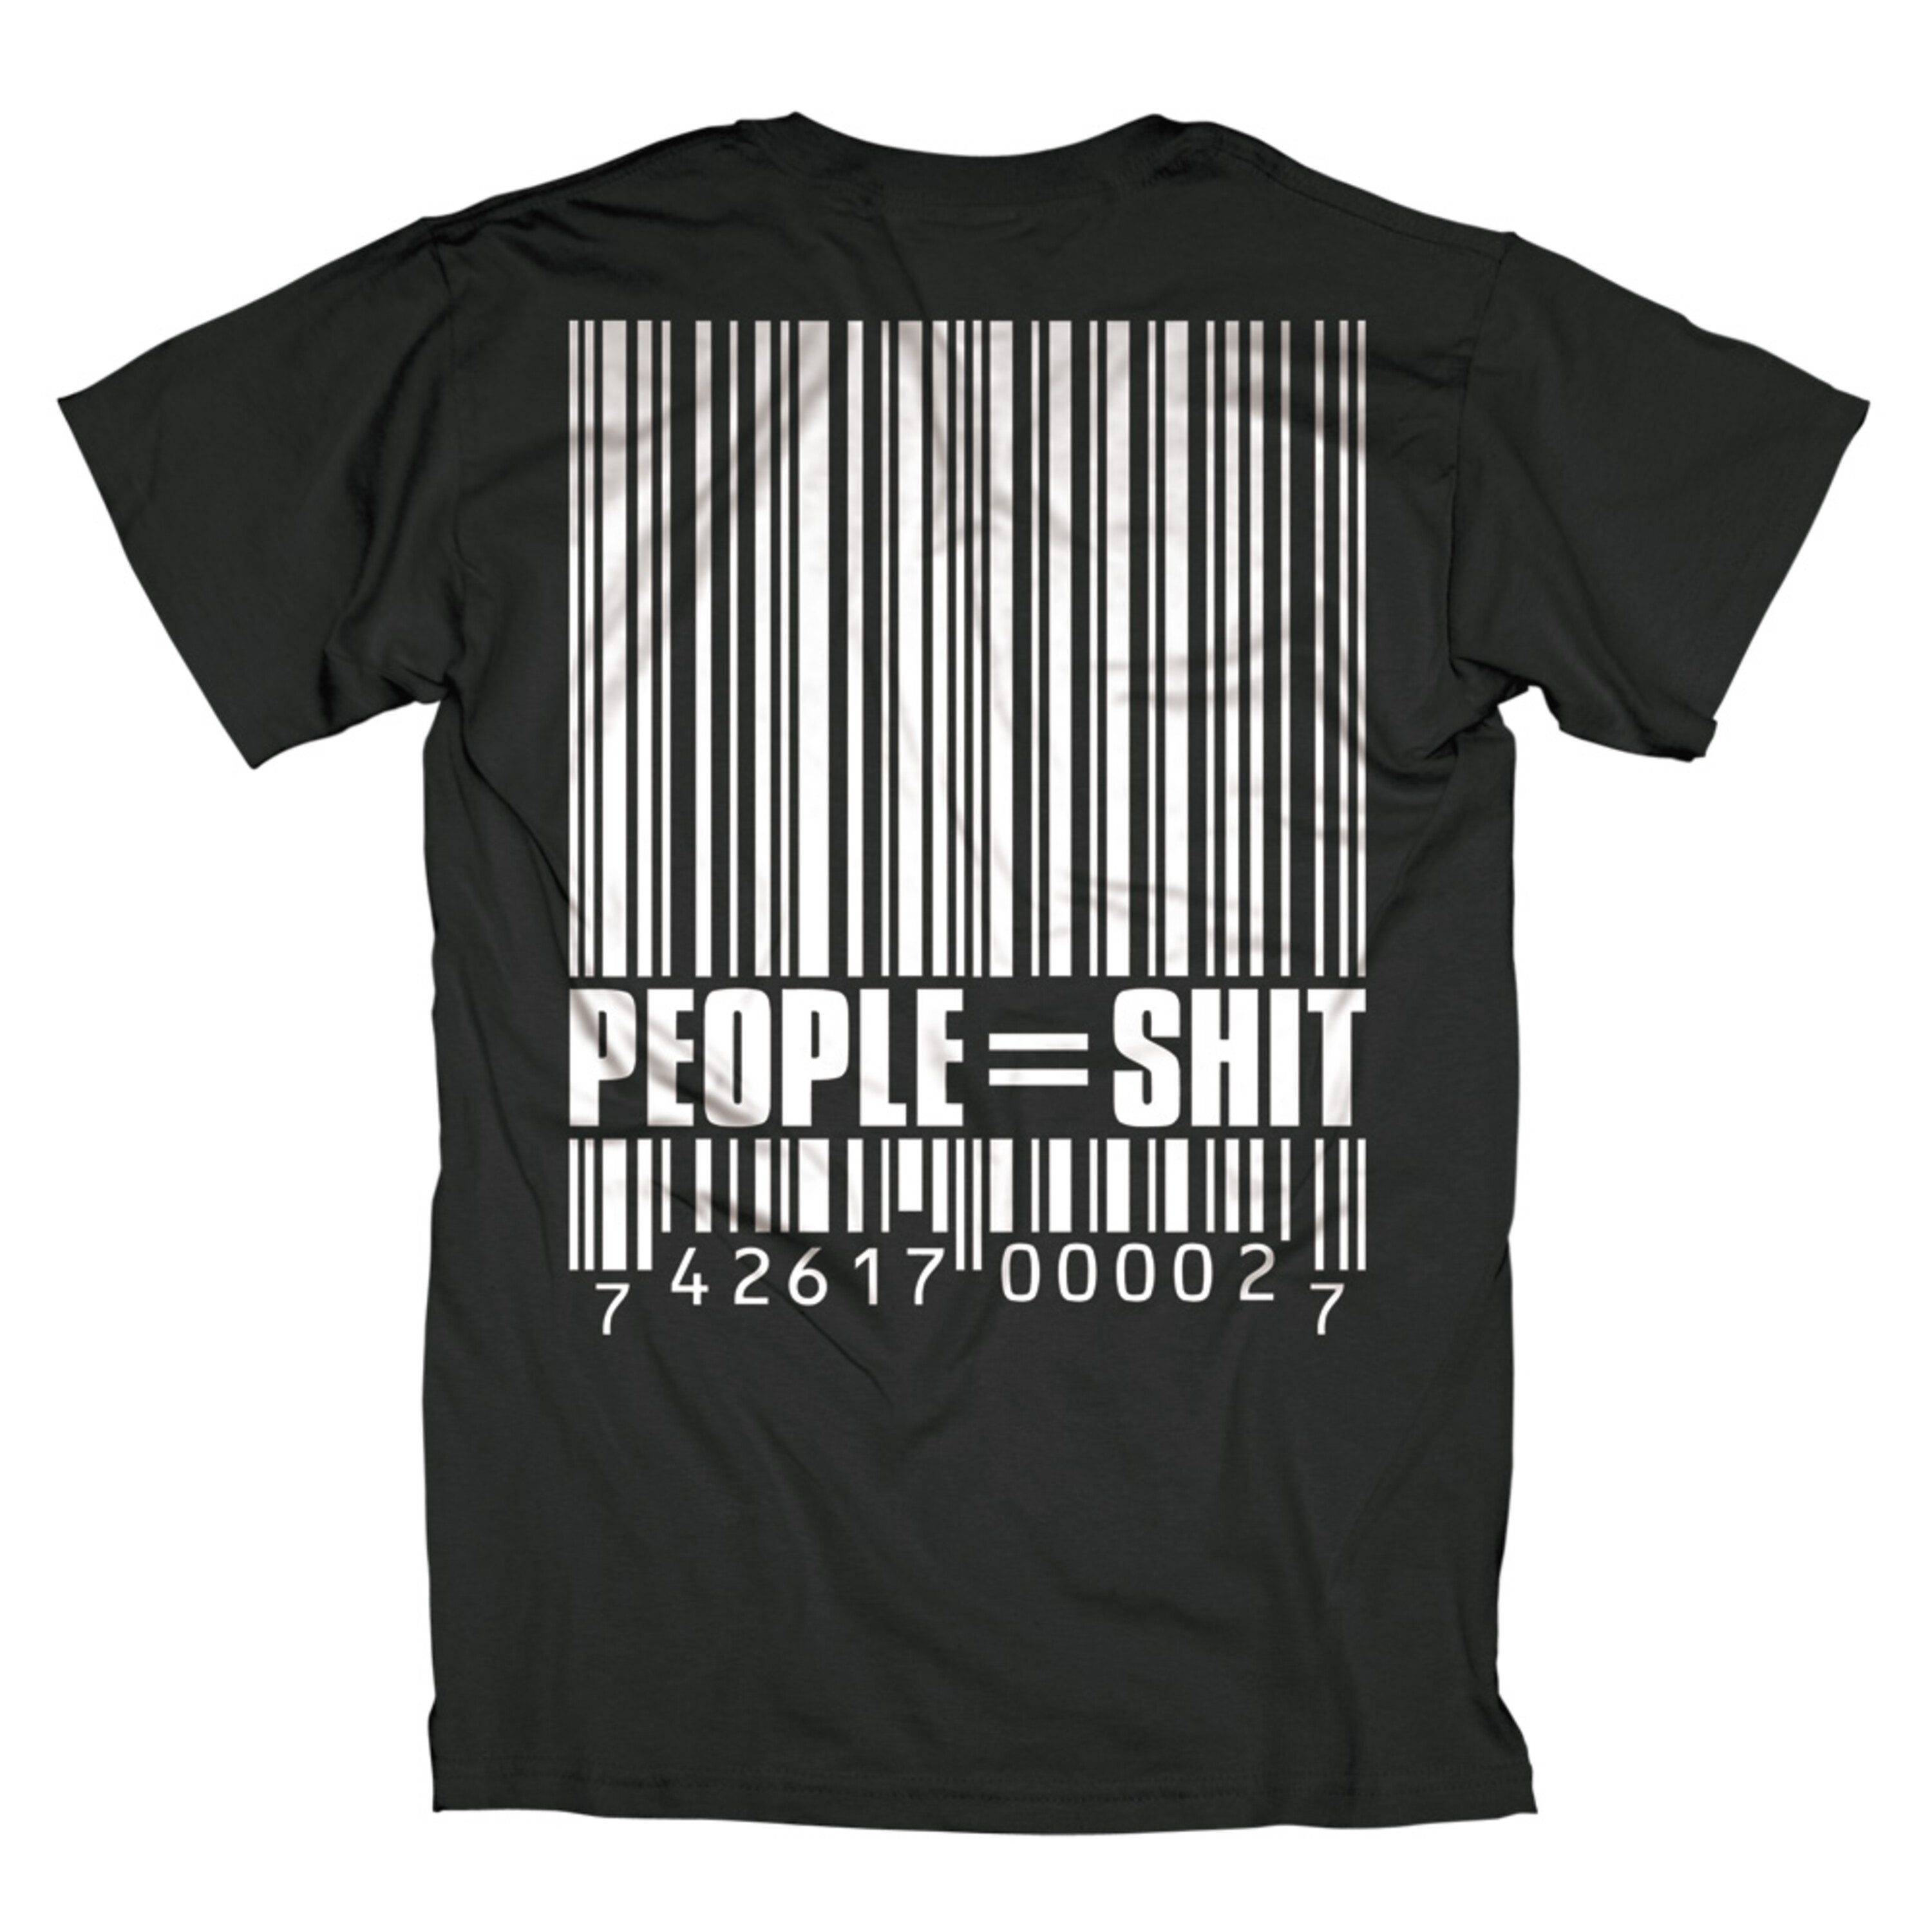 Slipknot Shop - People = Shit - Slipknot - T-Shirt - Merch